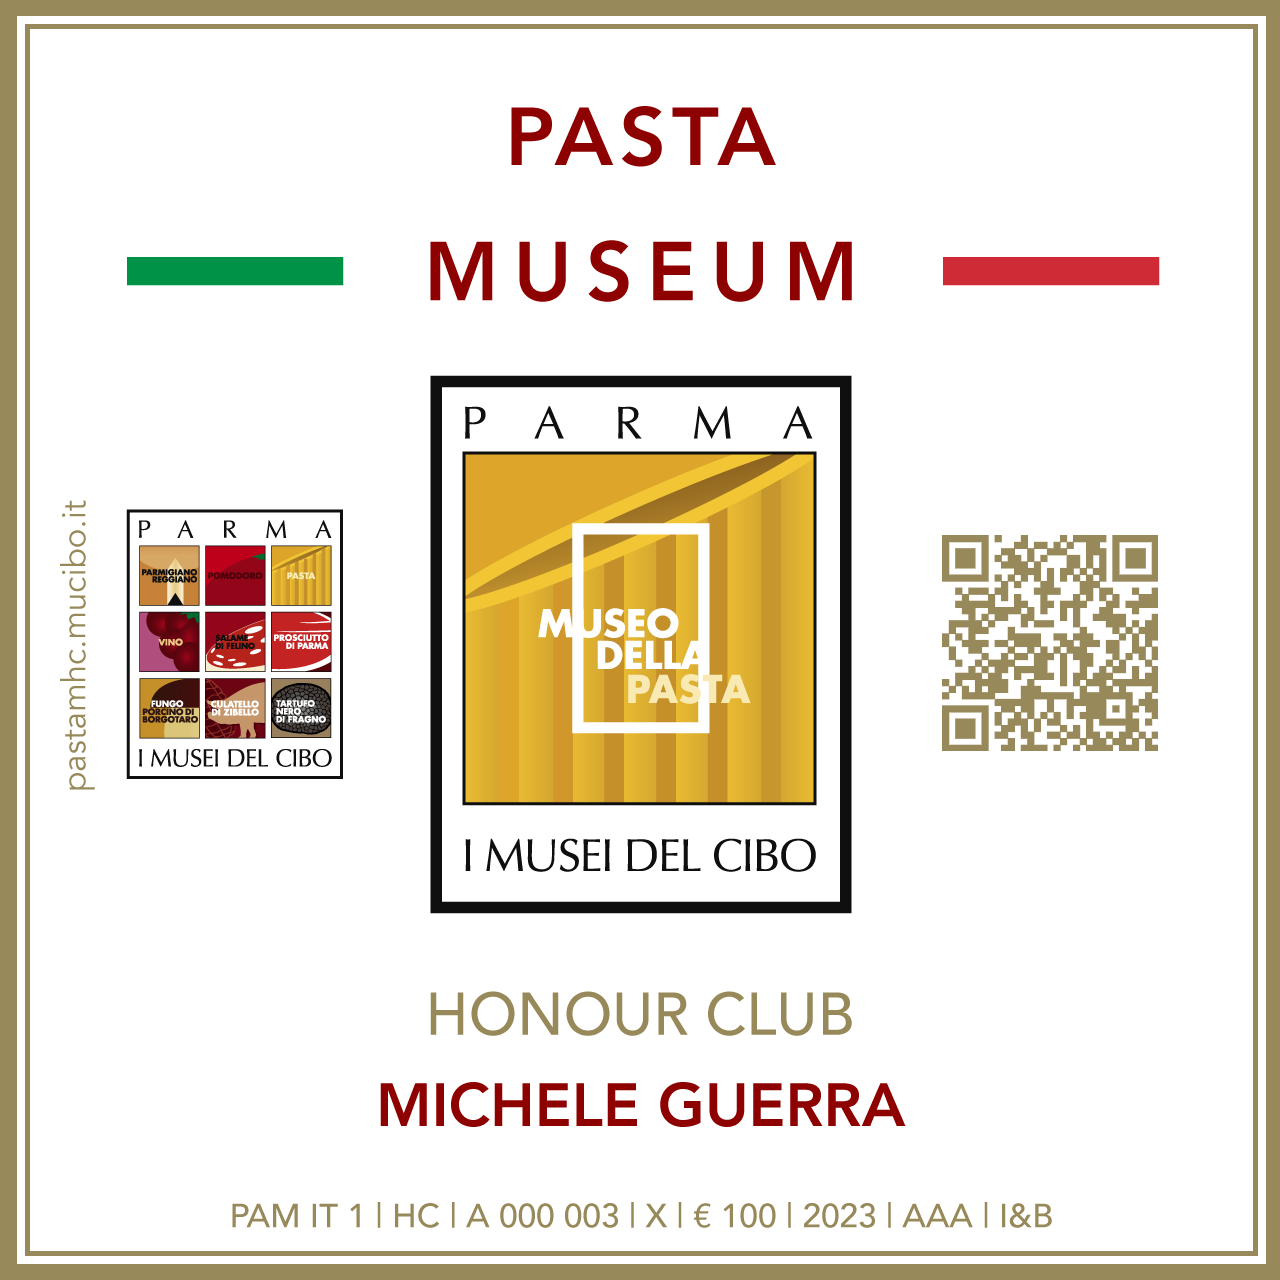 Pasta Museum Honour Club - Token Id A 000 003 - MICHELE GUERRA